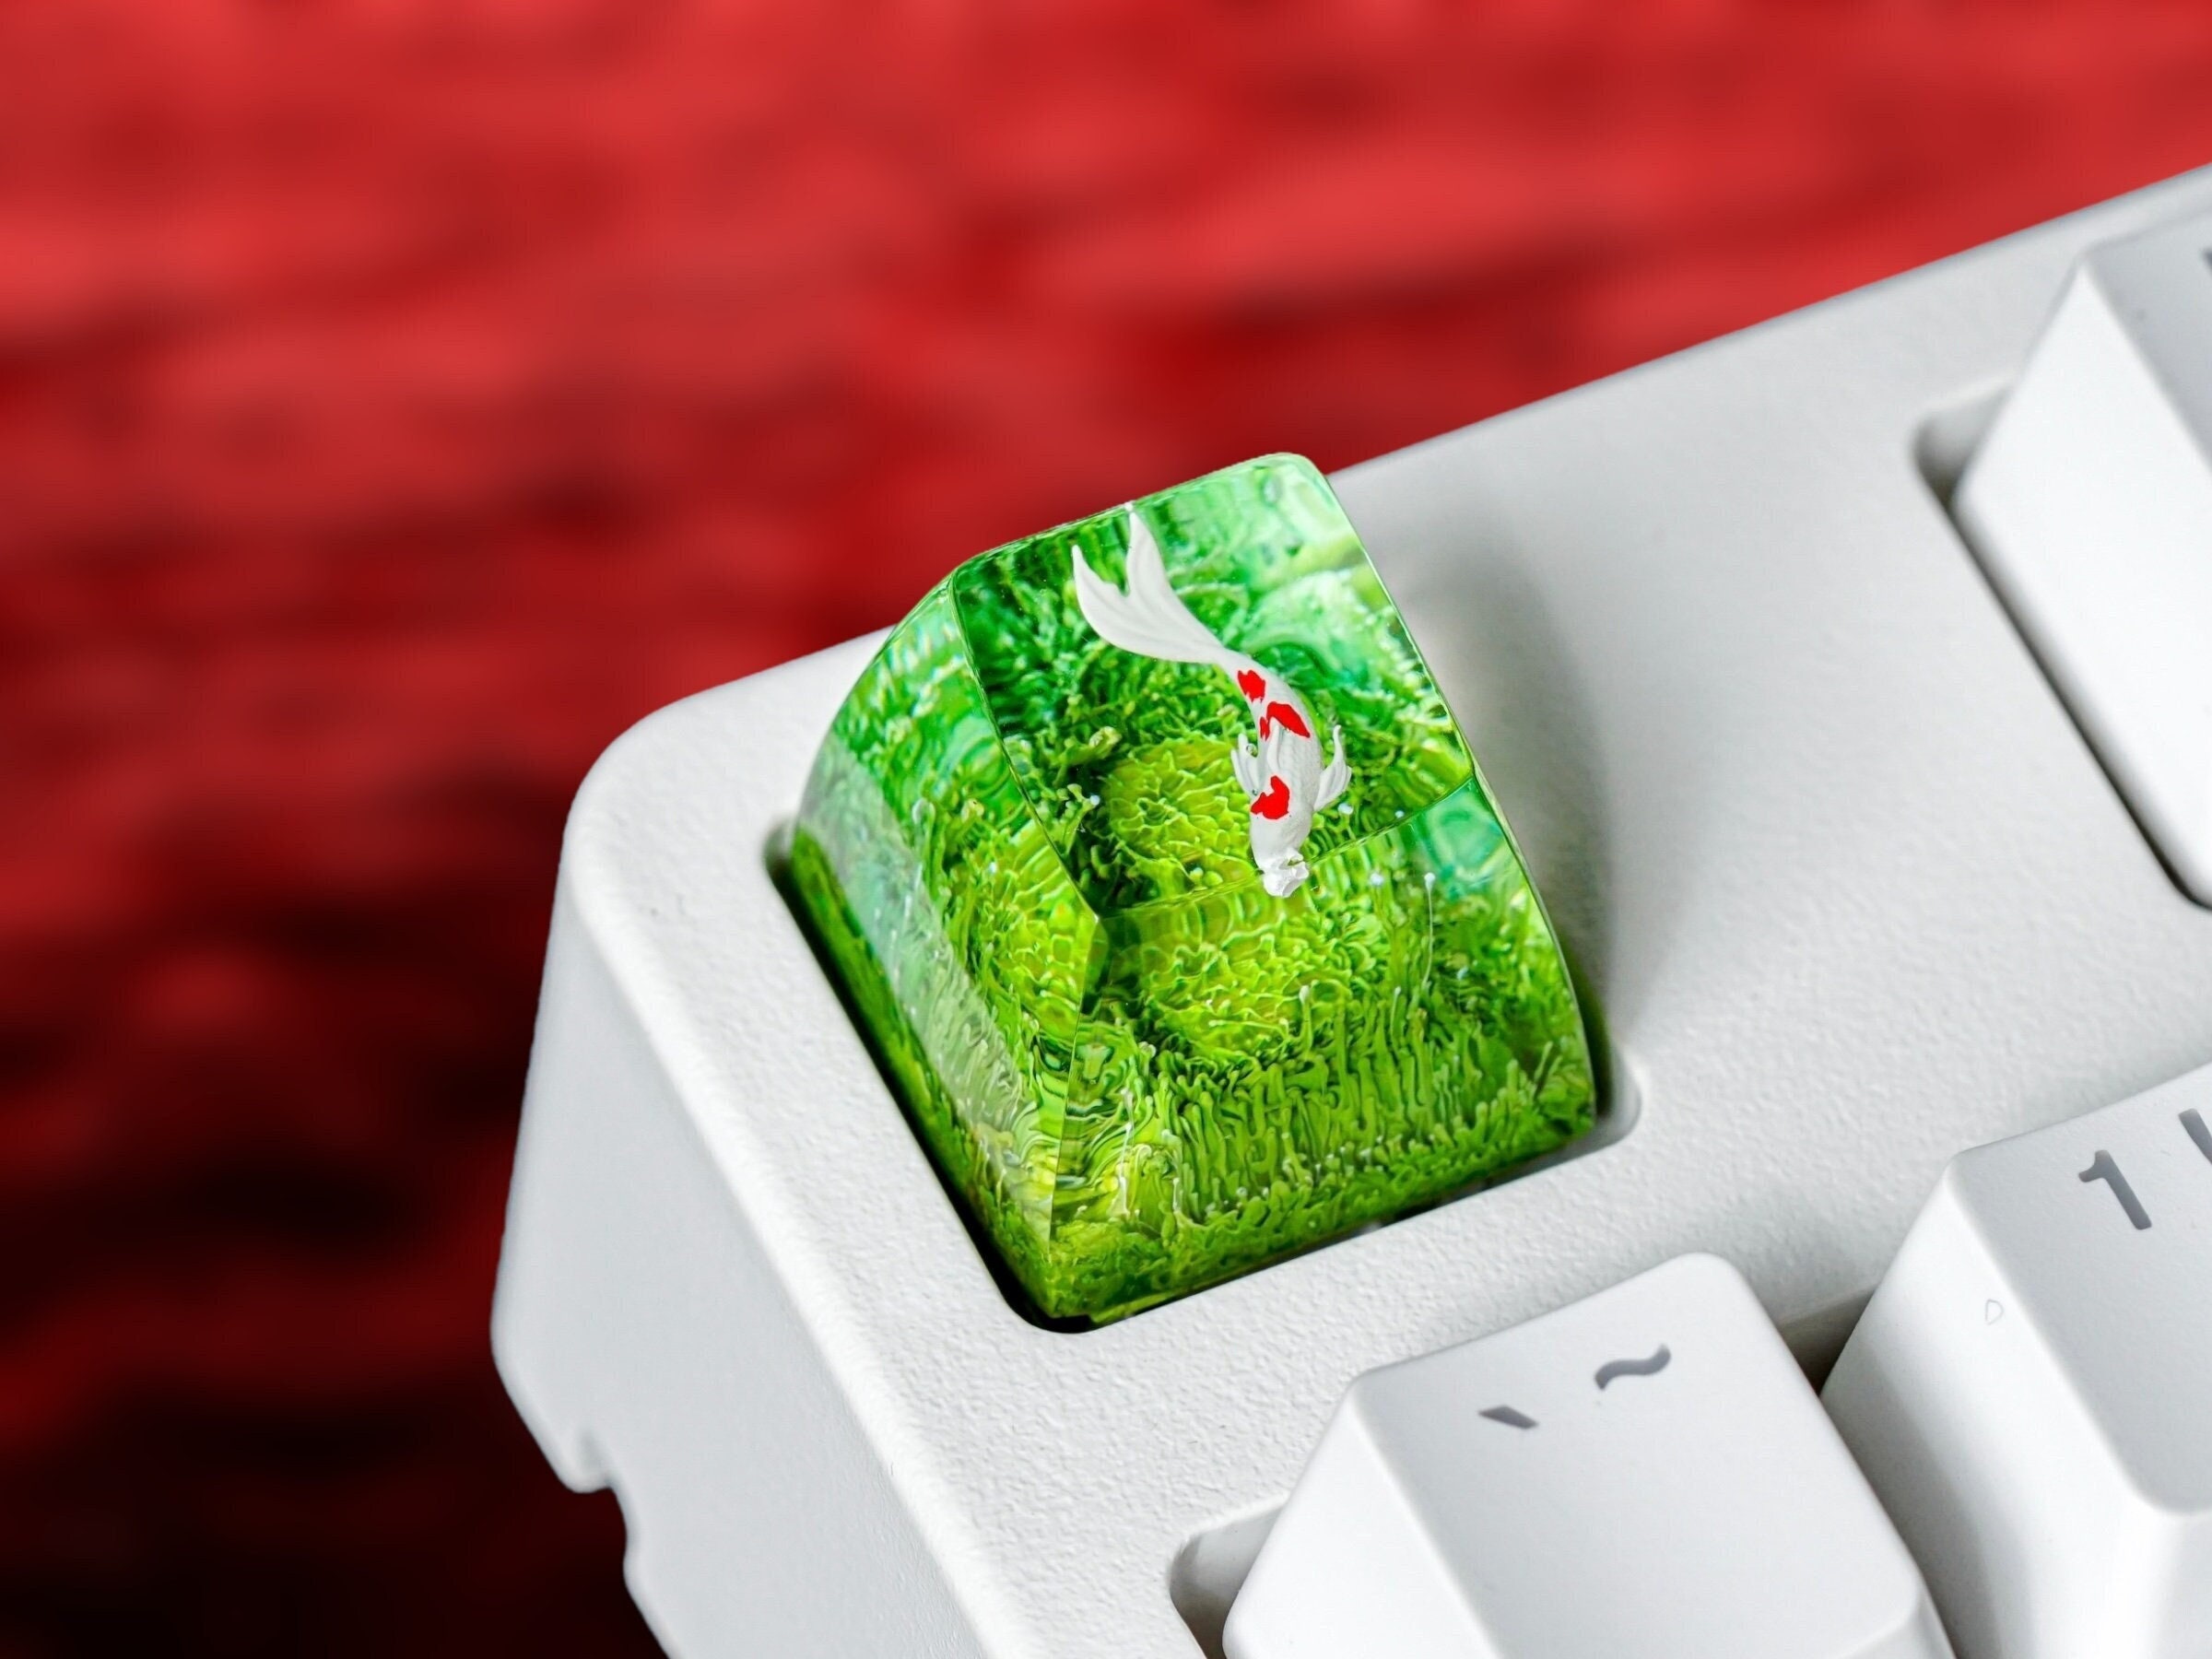 Koi Fish Keycap, Green Coral, Artisan Keycap, Japanese Koi, Keycap for MX Cherry Switches Keyboard, Handmade Gift